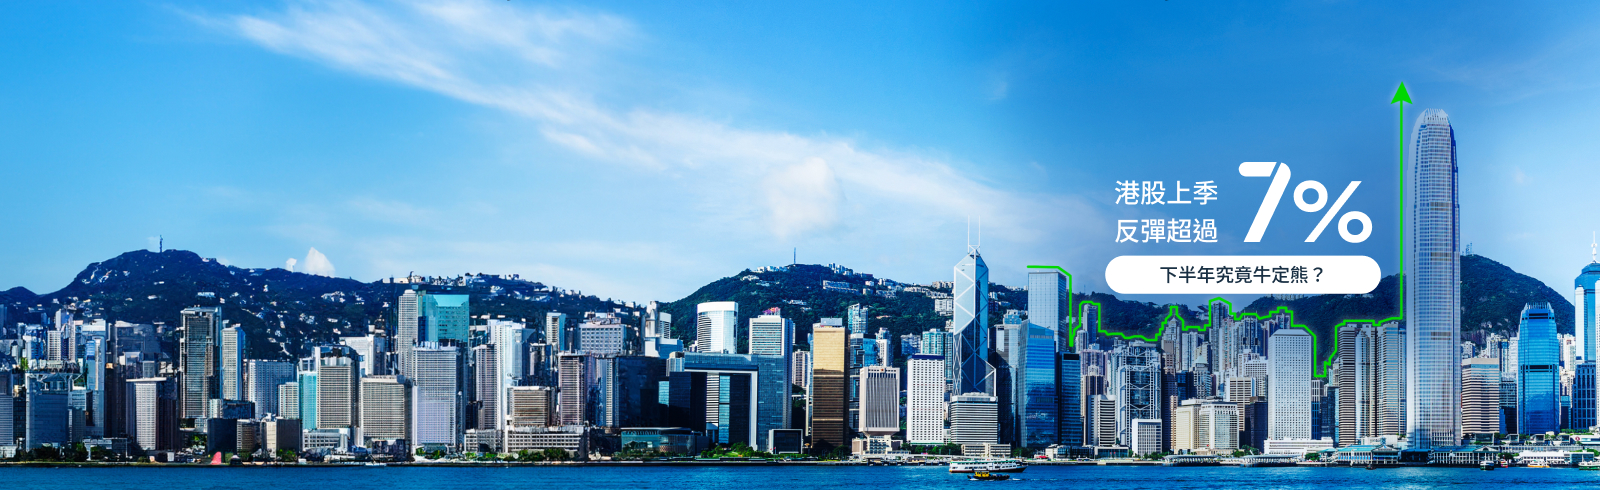 Sxa reactivation hk stock exchange webpage article top banner x tc